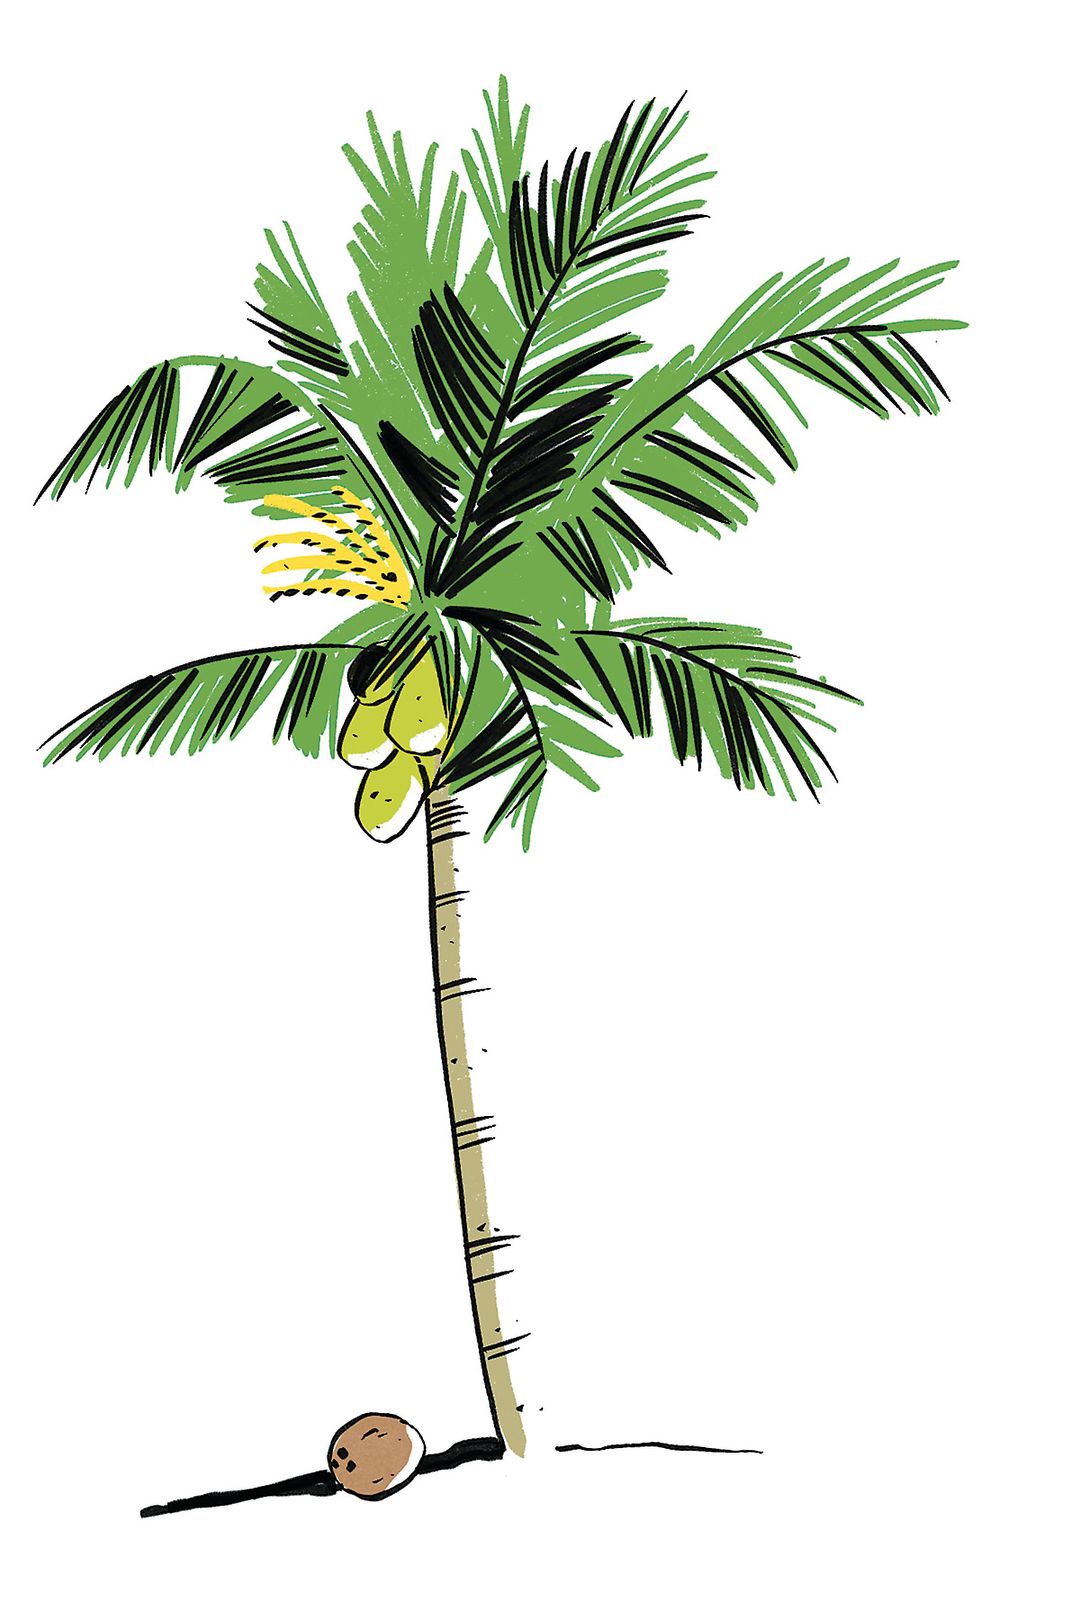 The Coconut Palm Is A Universal Symbol Of The Tropics Sarasota Magazine